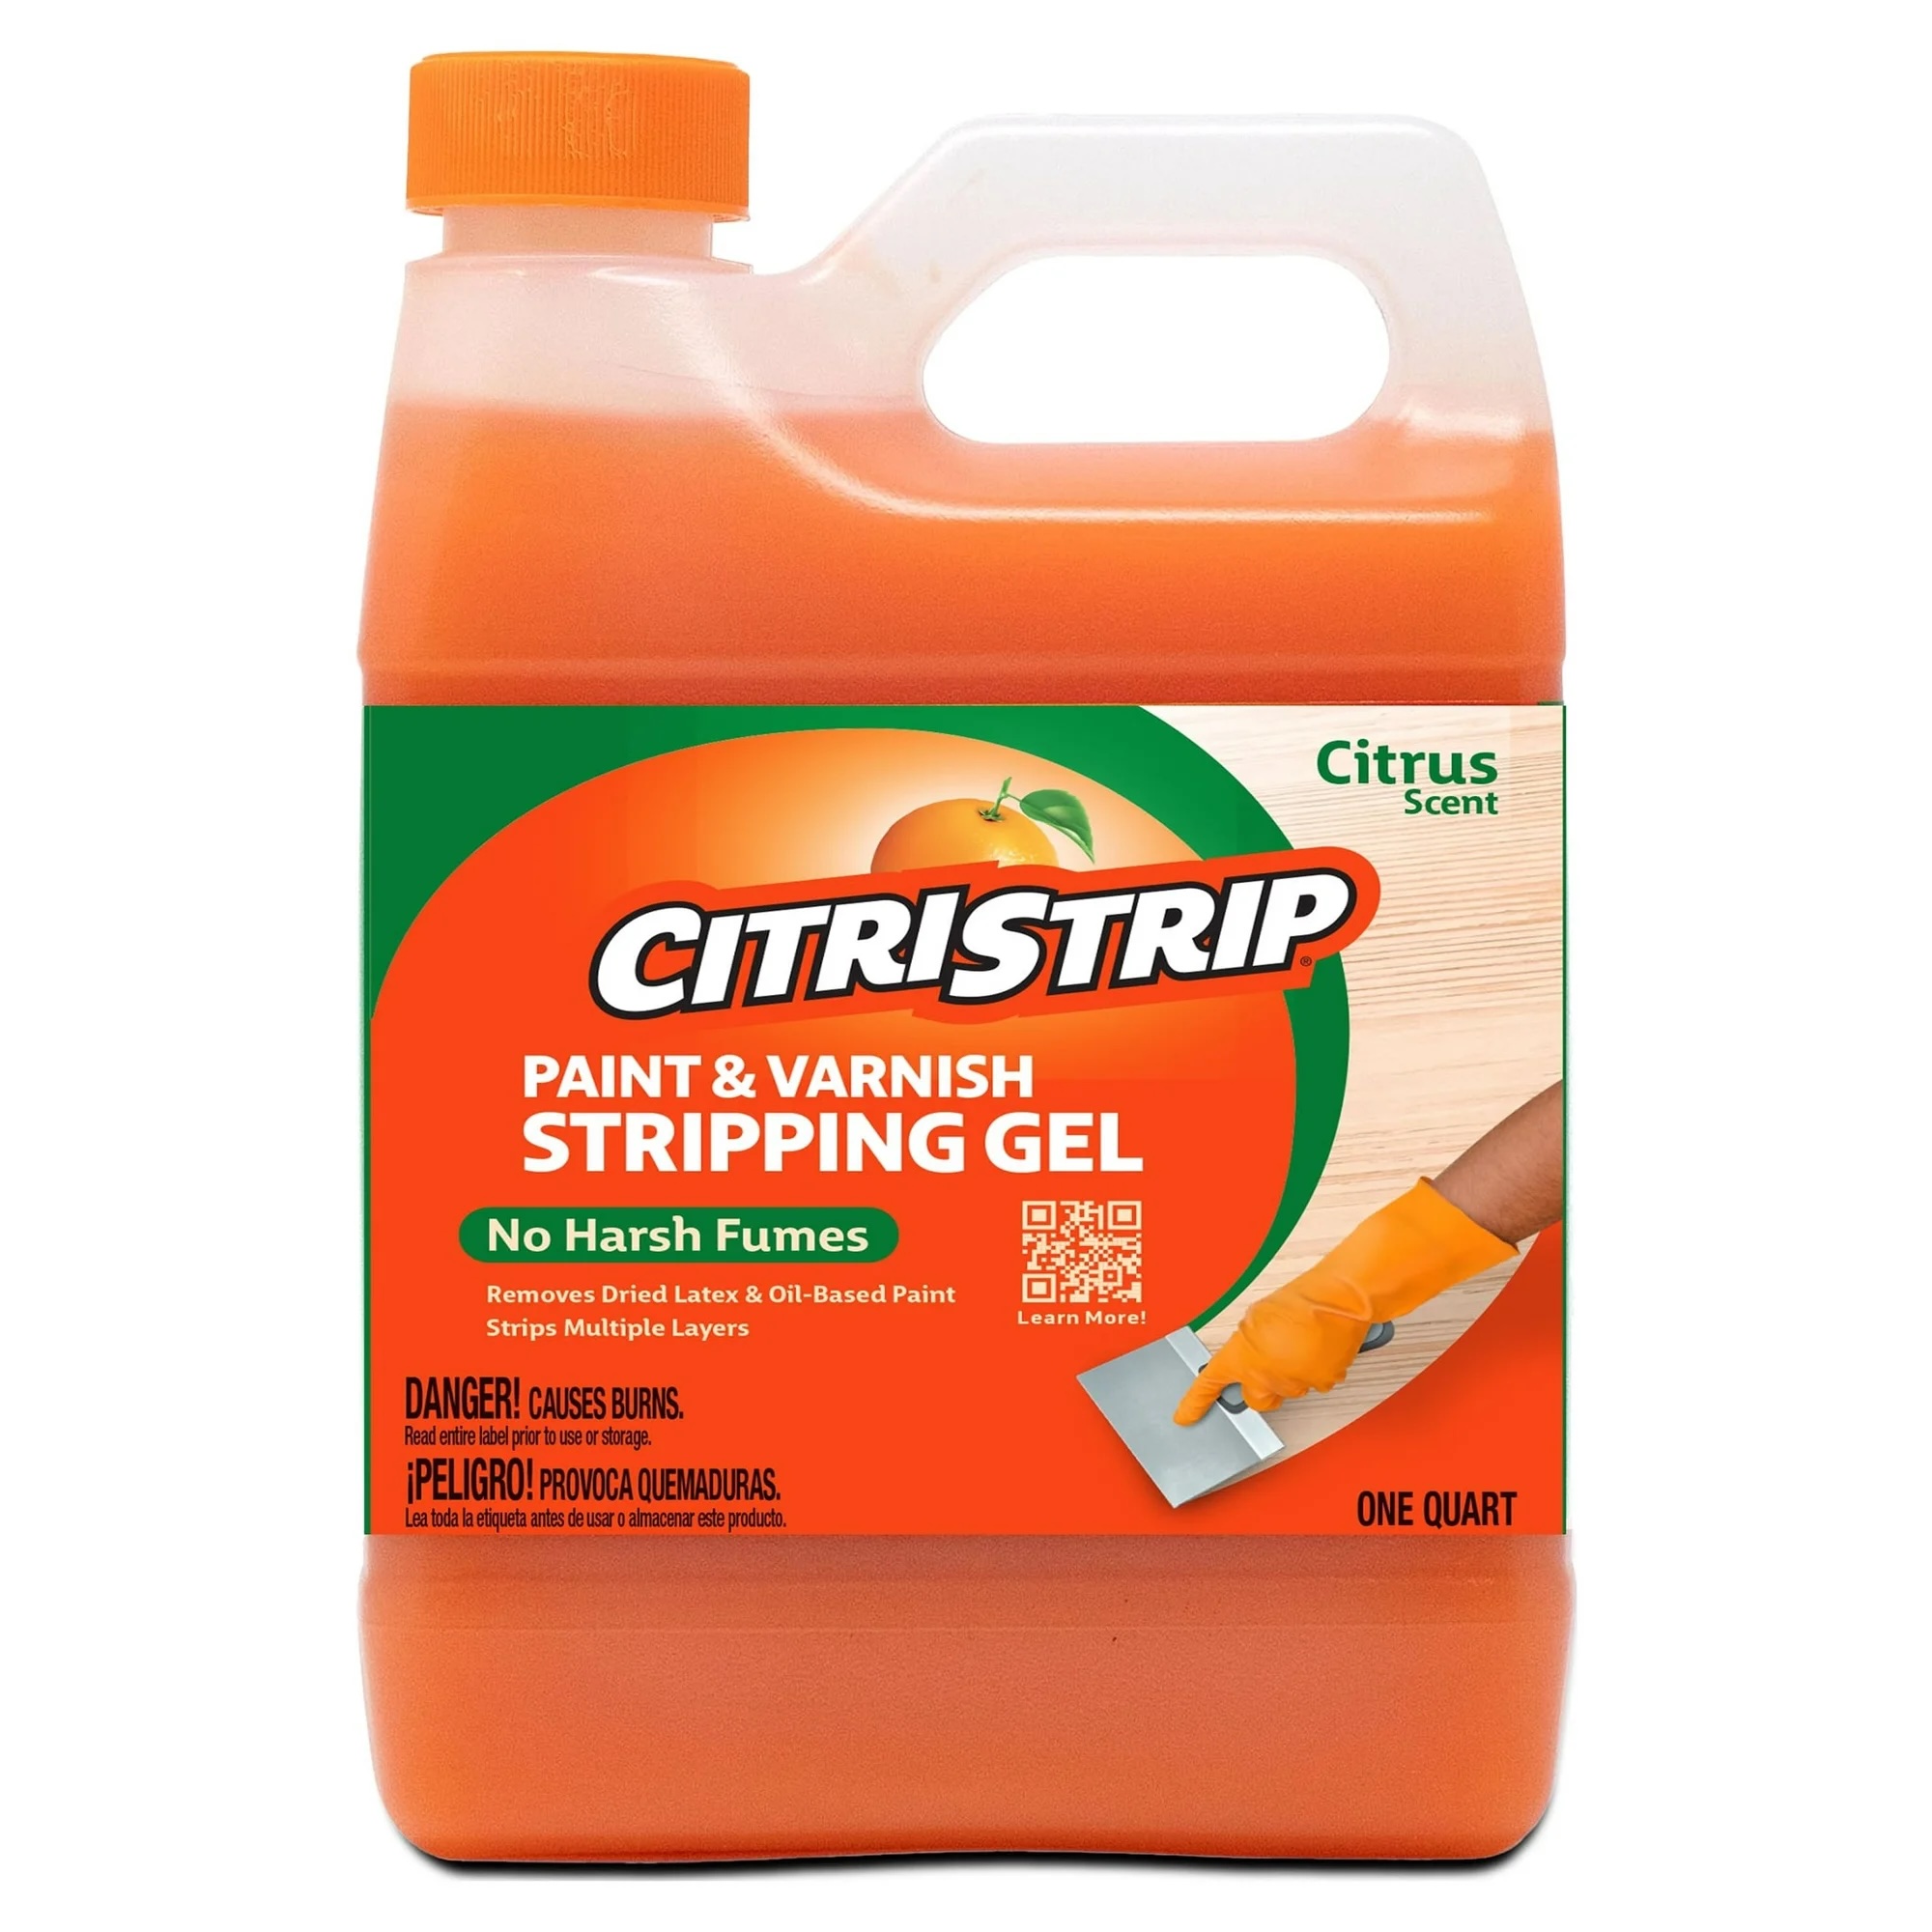 CitriStrip-Paint-Varnish-Stripping-Gel-Citrus-Scent-1-Quart_ecb581a2-0af4-447b-8005-f589e22c8...jpeg